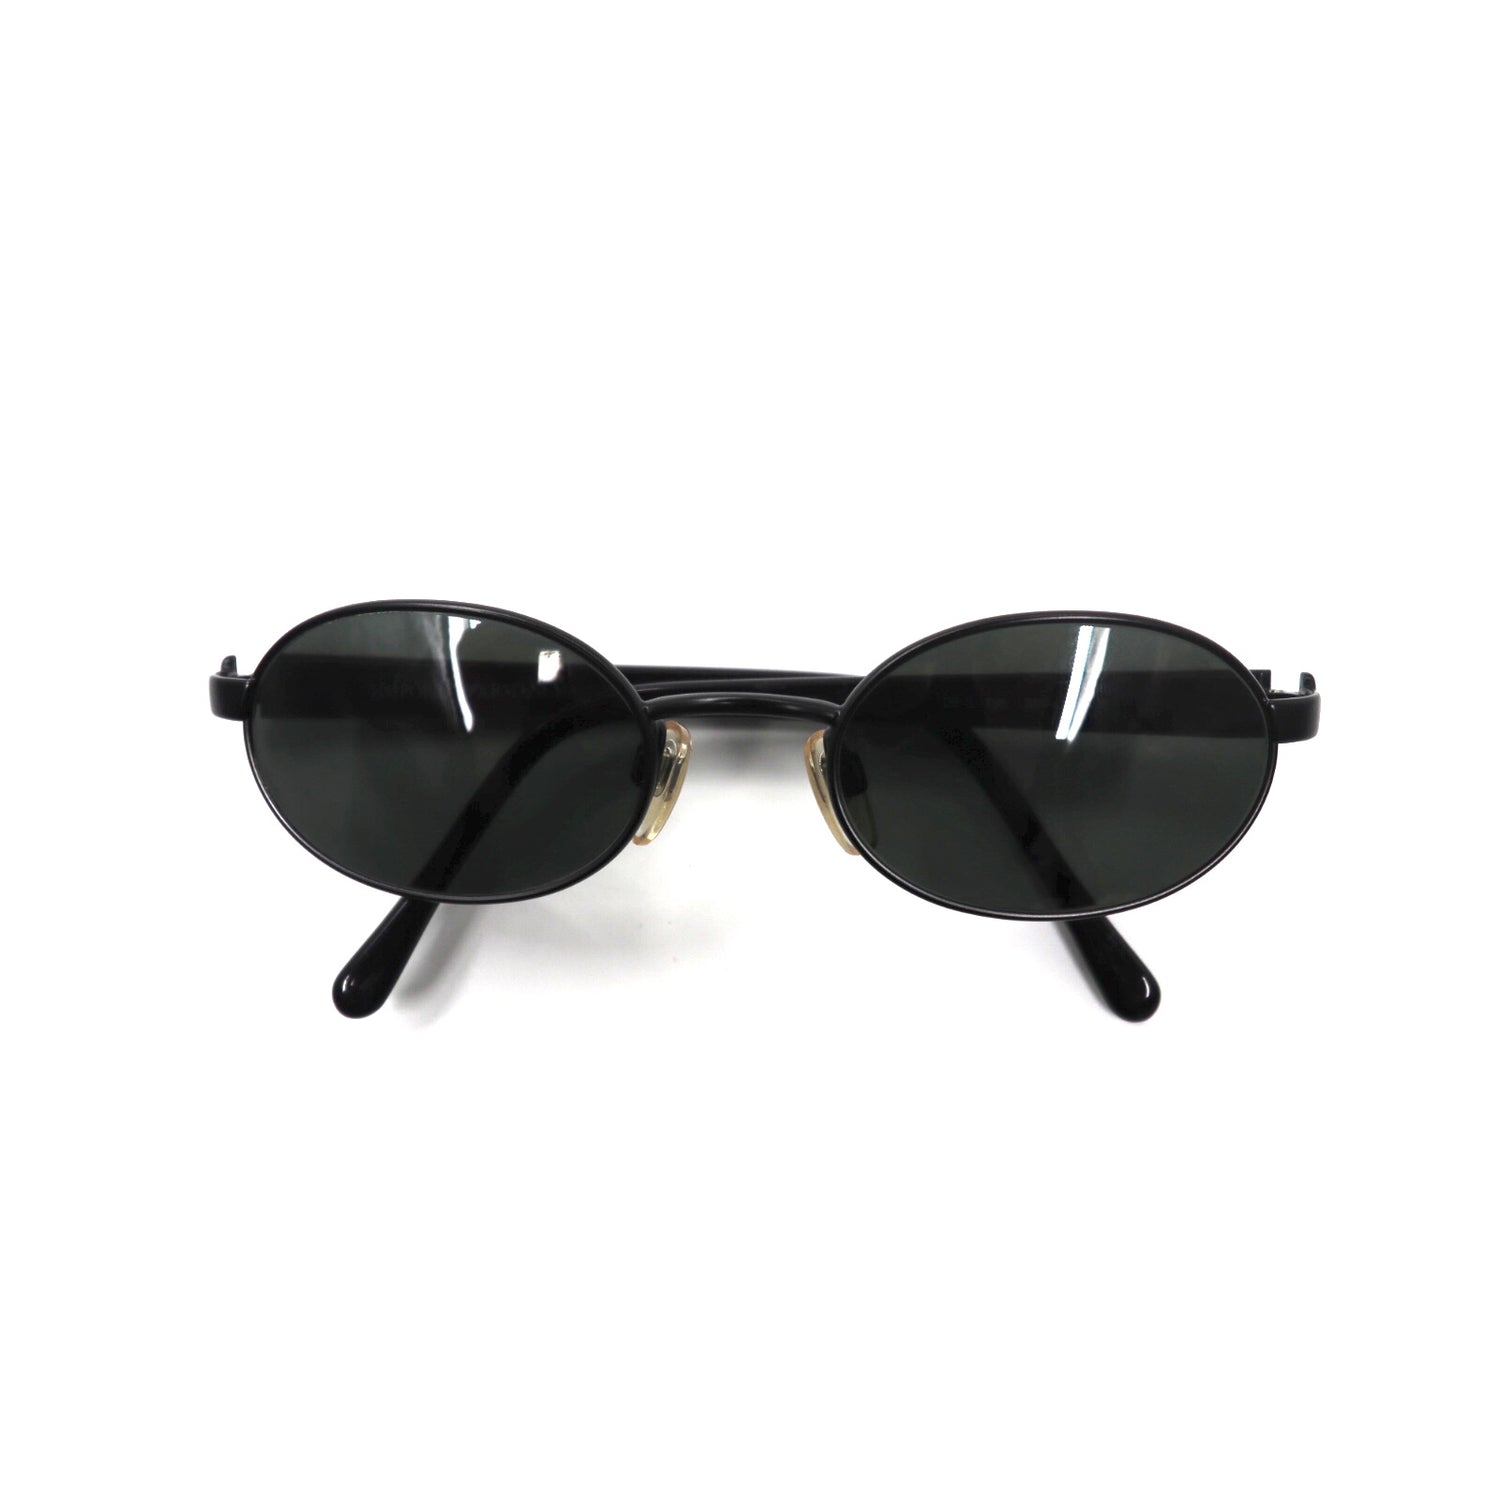 EMPORIO ARMANI Sunglasses Black 106-S 706 Made in Italy – 日本然リトテ